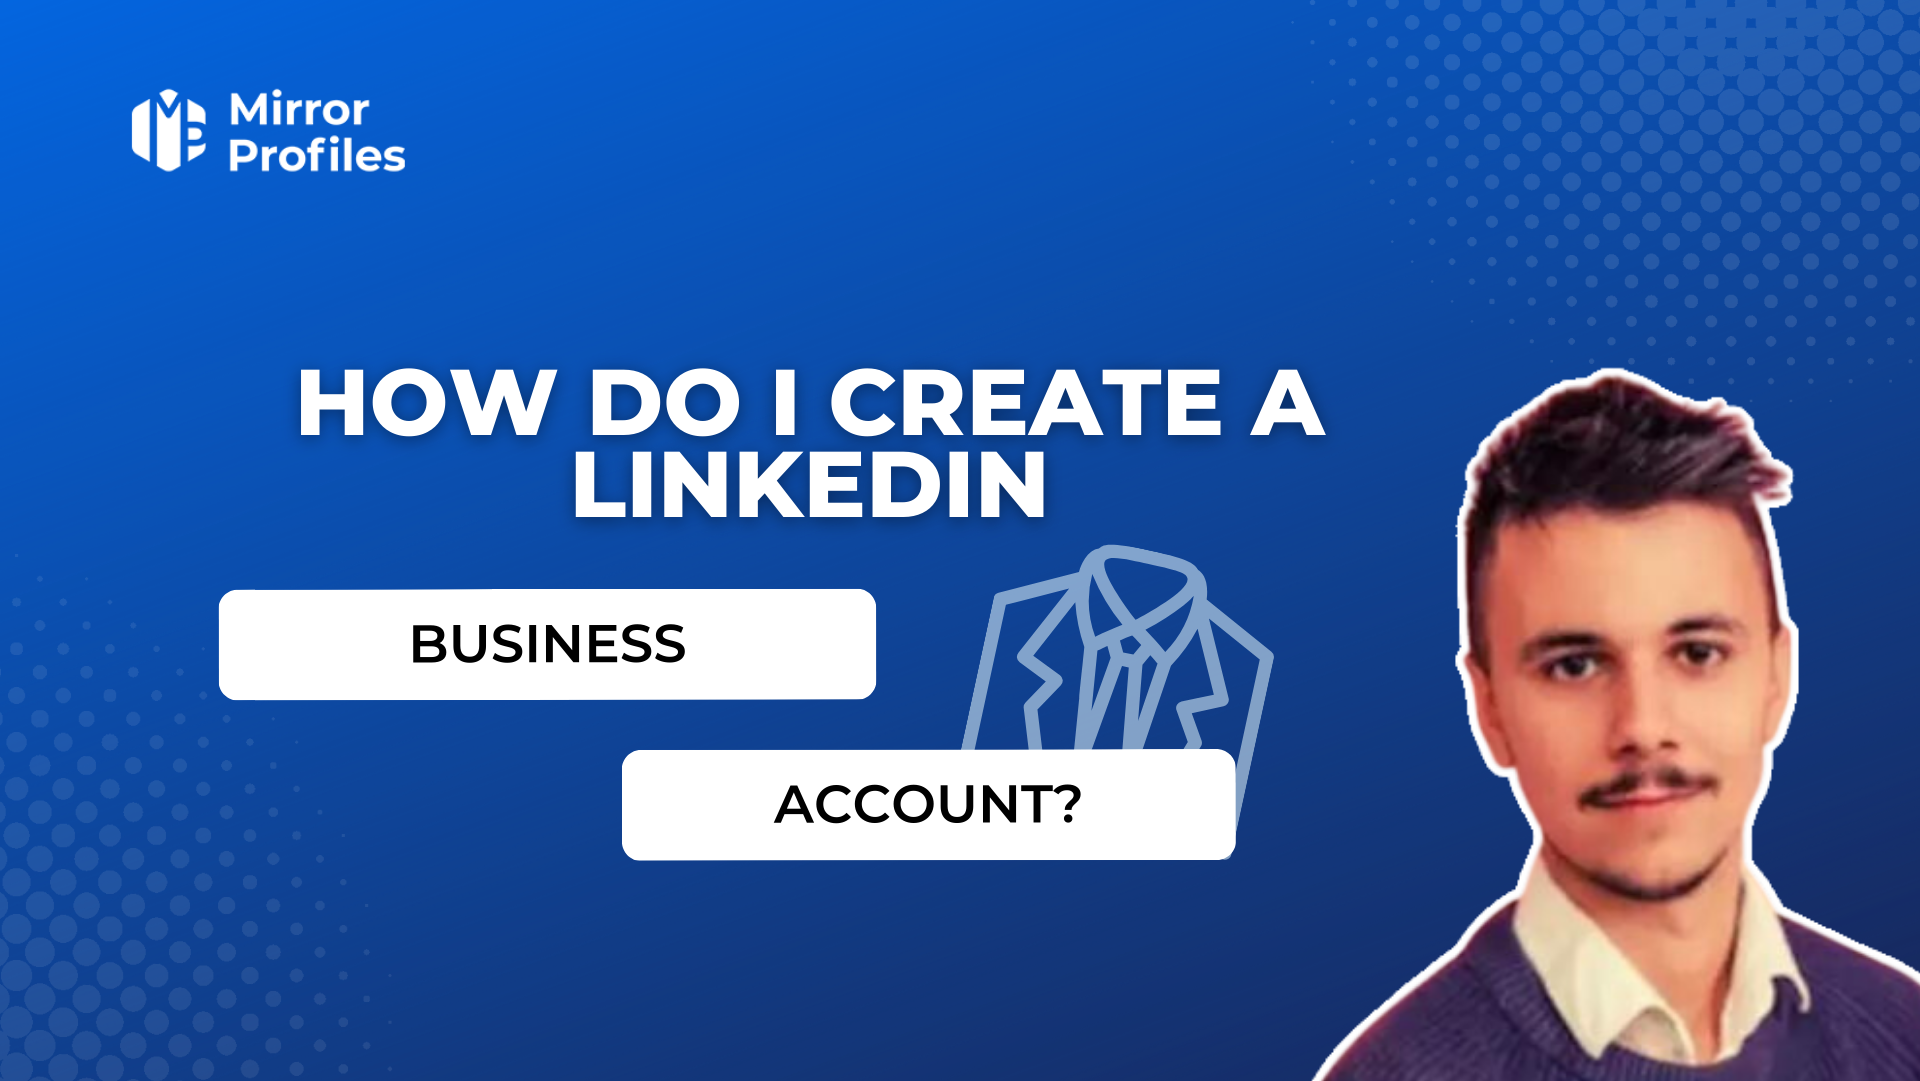 How do I create a LinkedIn business account?